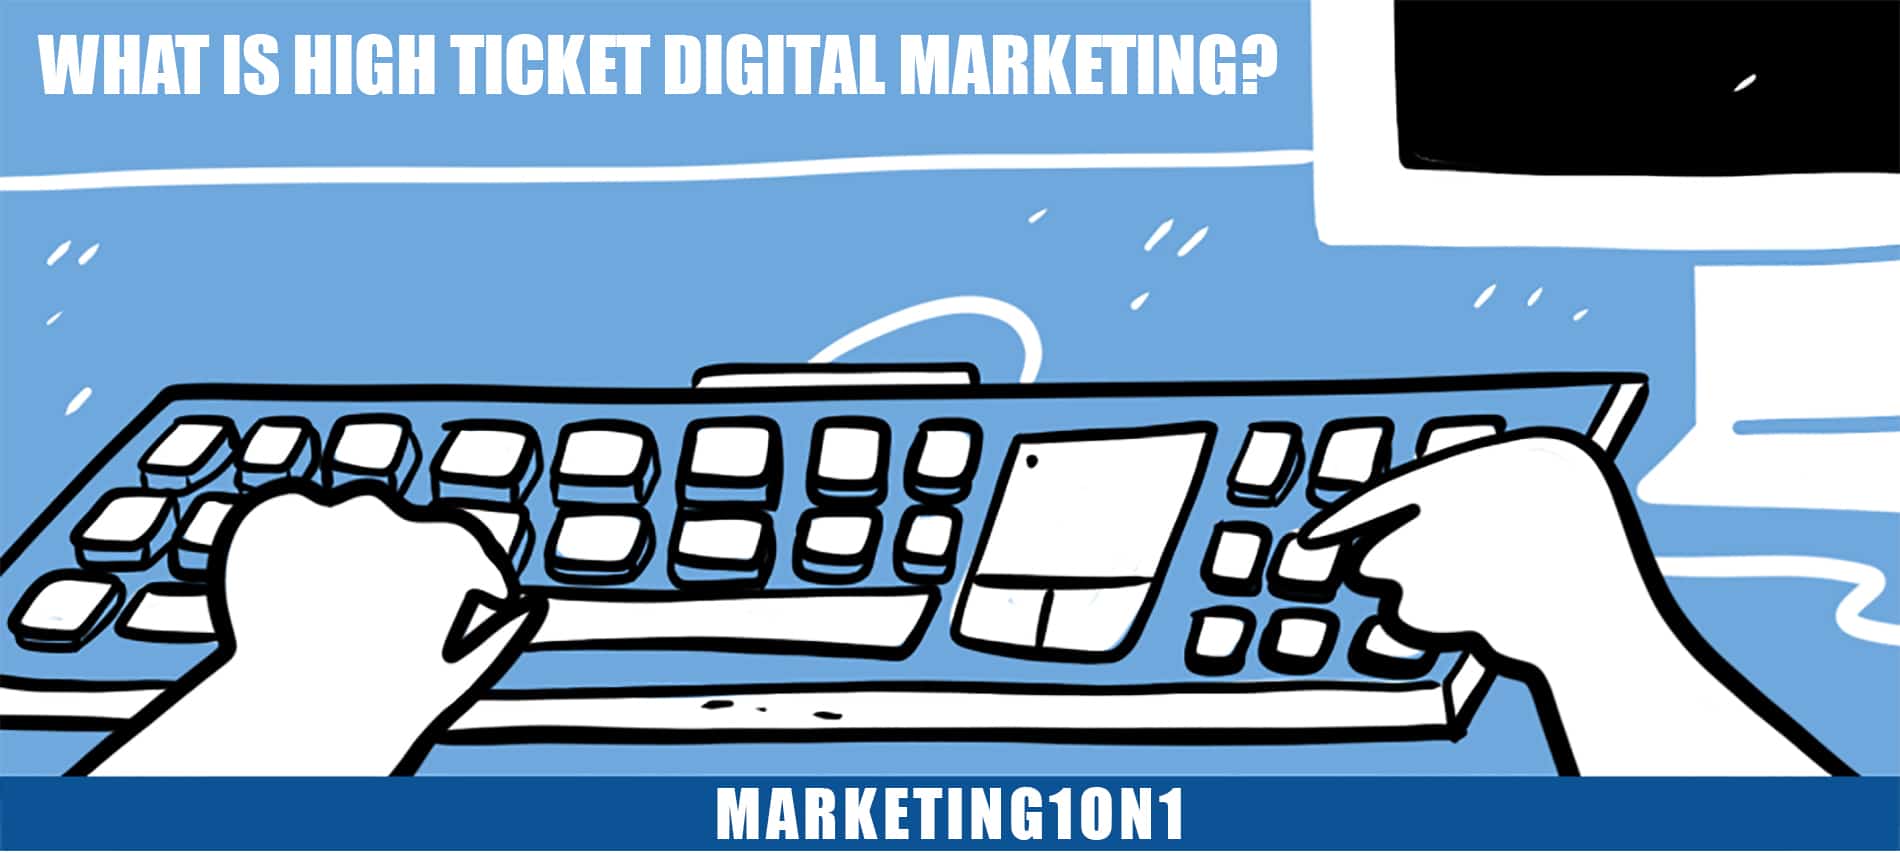 What is high ticket digital marketing?